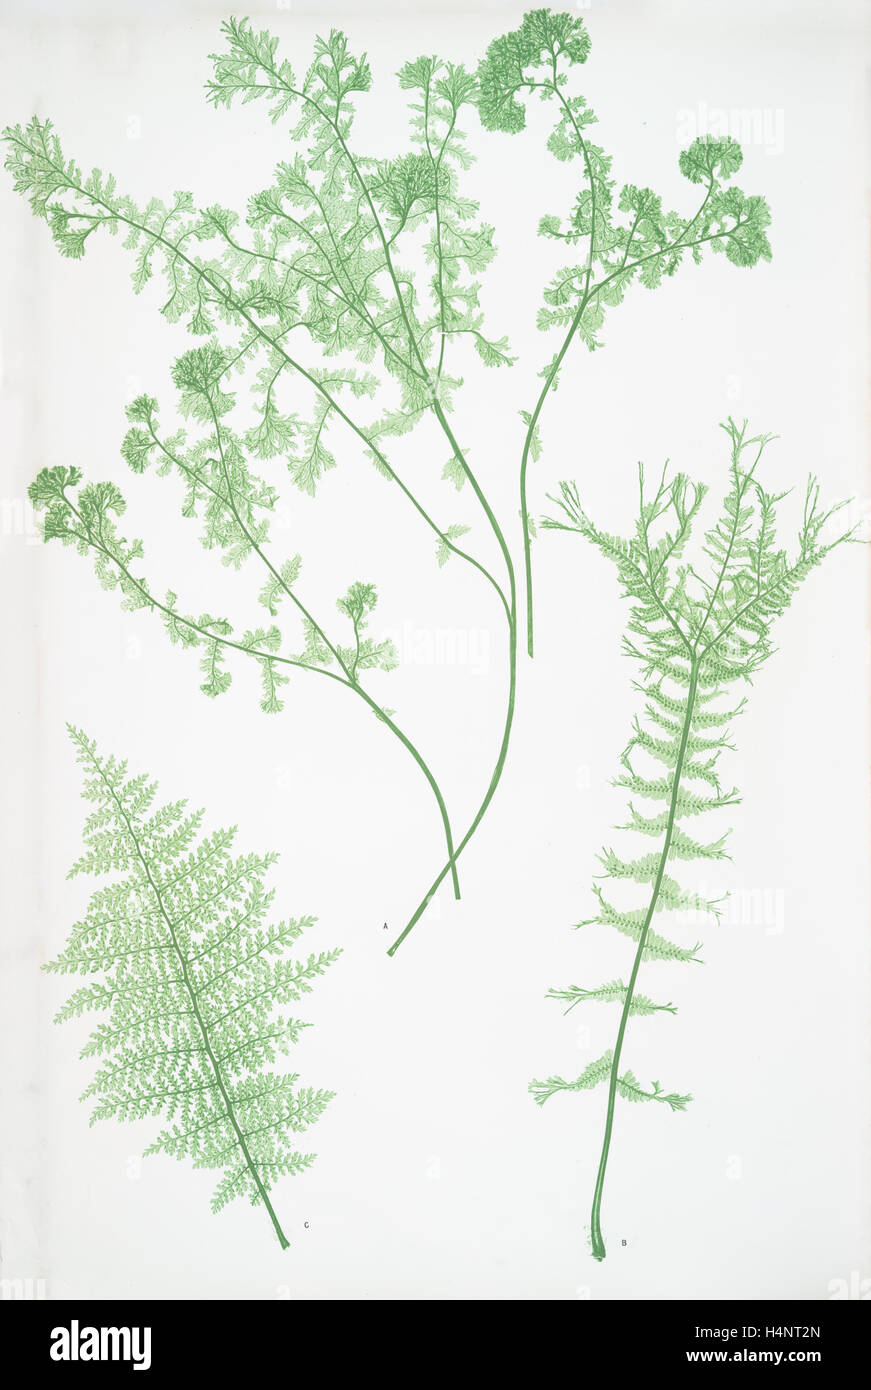 A. Athyrium Filix-foemina crispum. B. Athyrium Filix-foemina depaperatum. C. Athyrium Filix-foemina dissectum. The lady fern Stock Photo